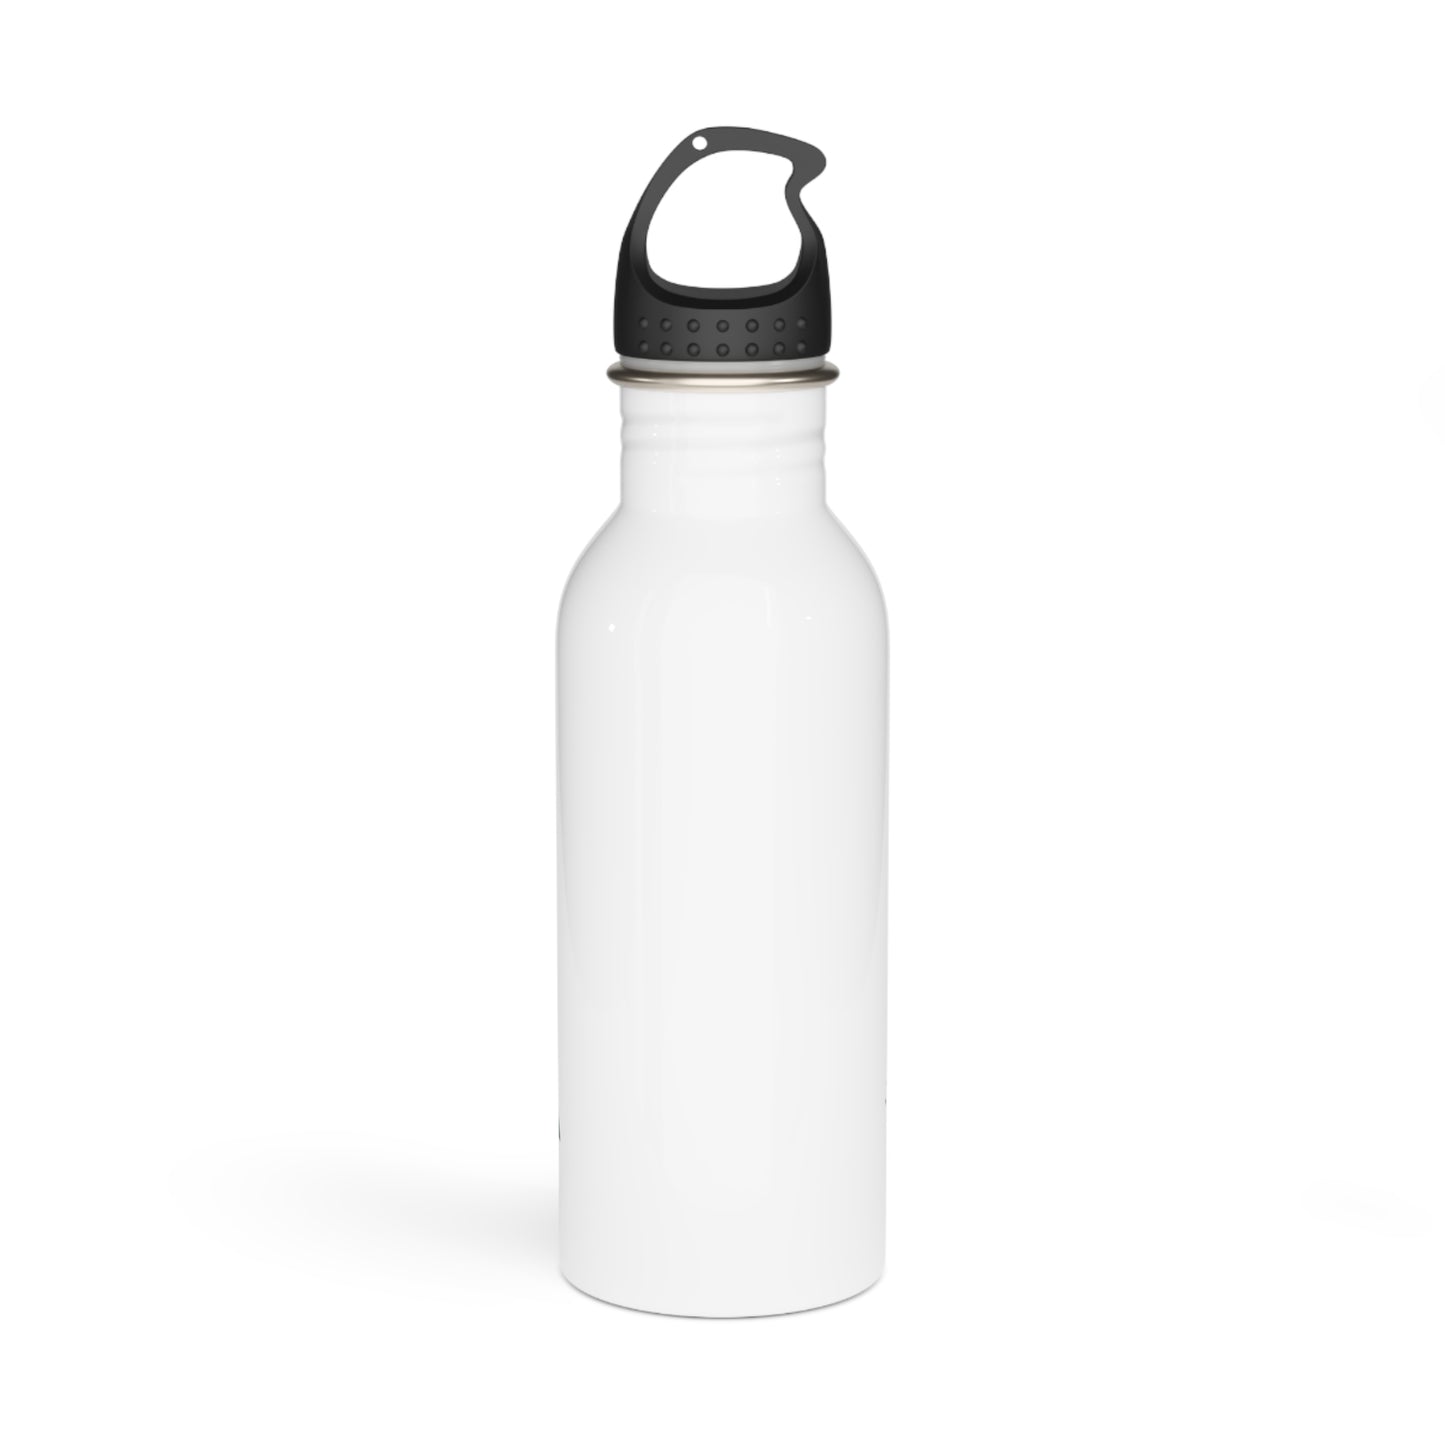 Harbourside Mountain Stainless Steel Water Bottle